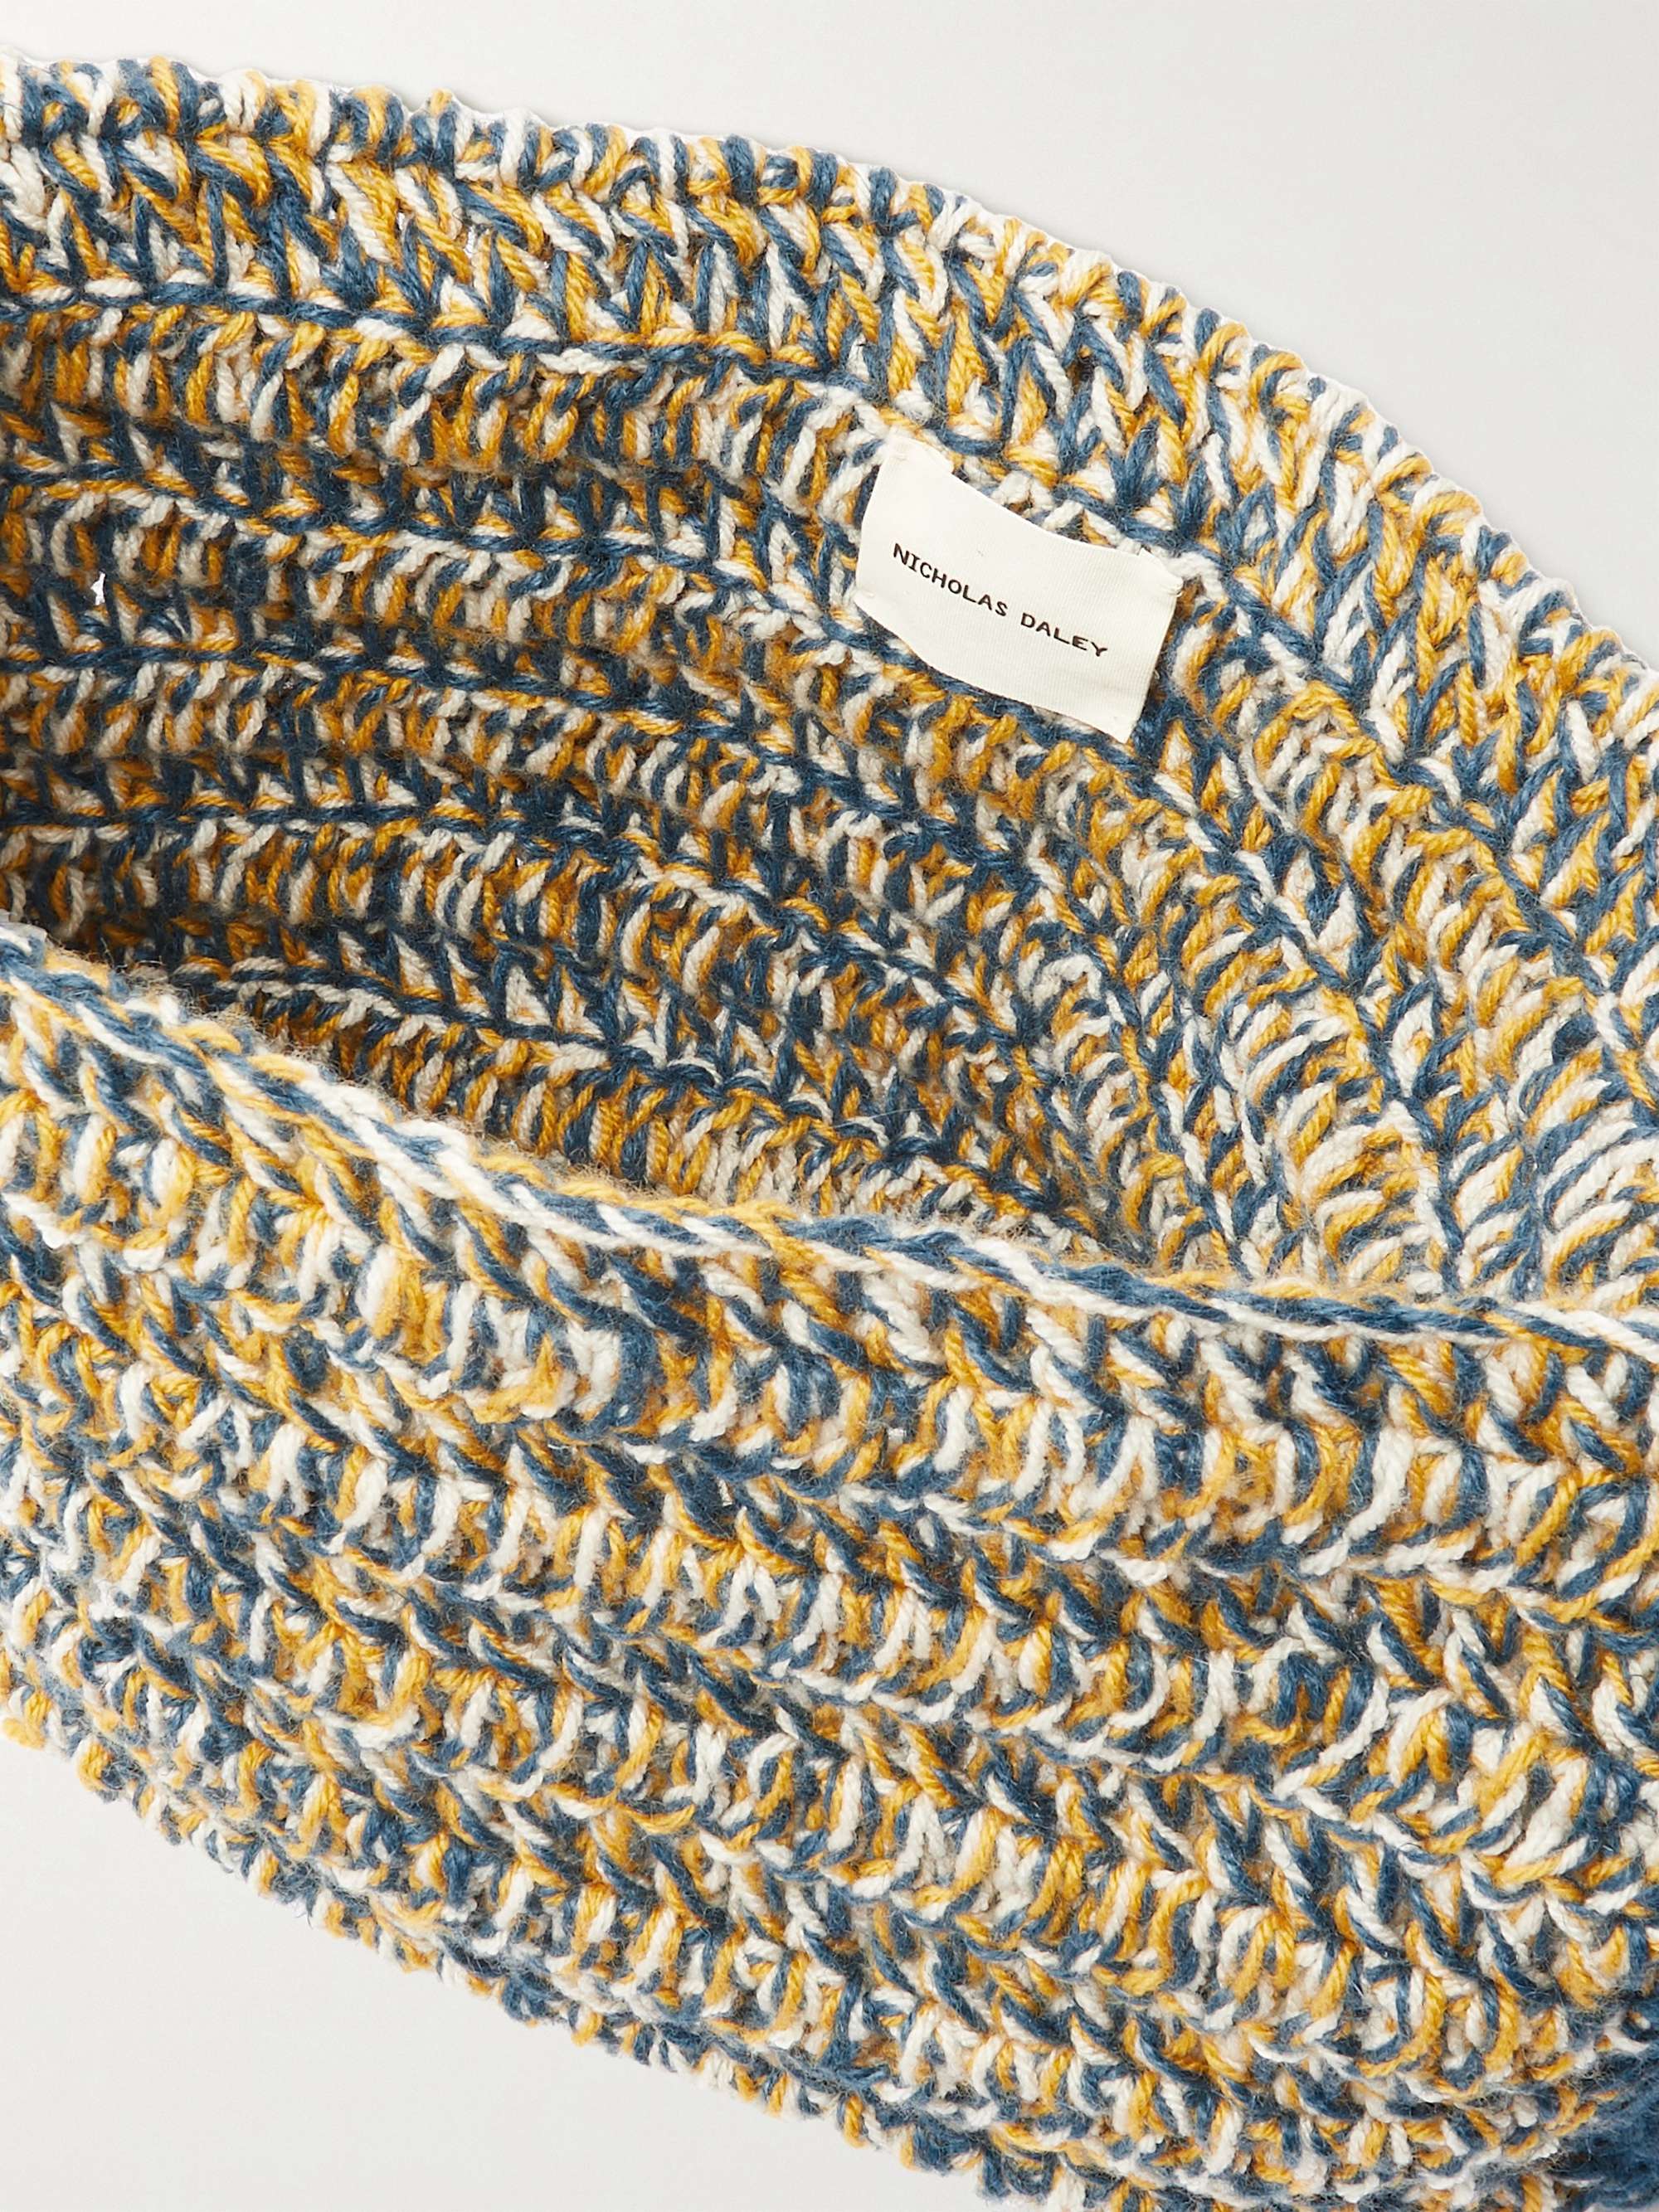 NICHOLAS DALEY Crocheted Jute and Cotton-Blend Messenger Bag